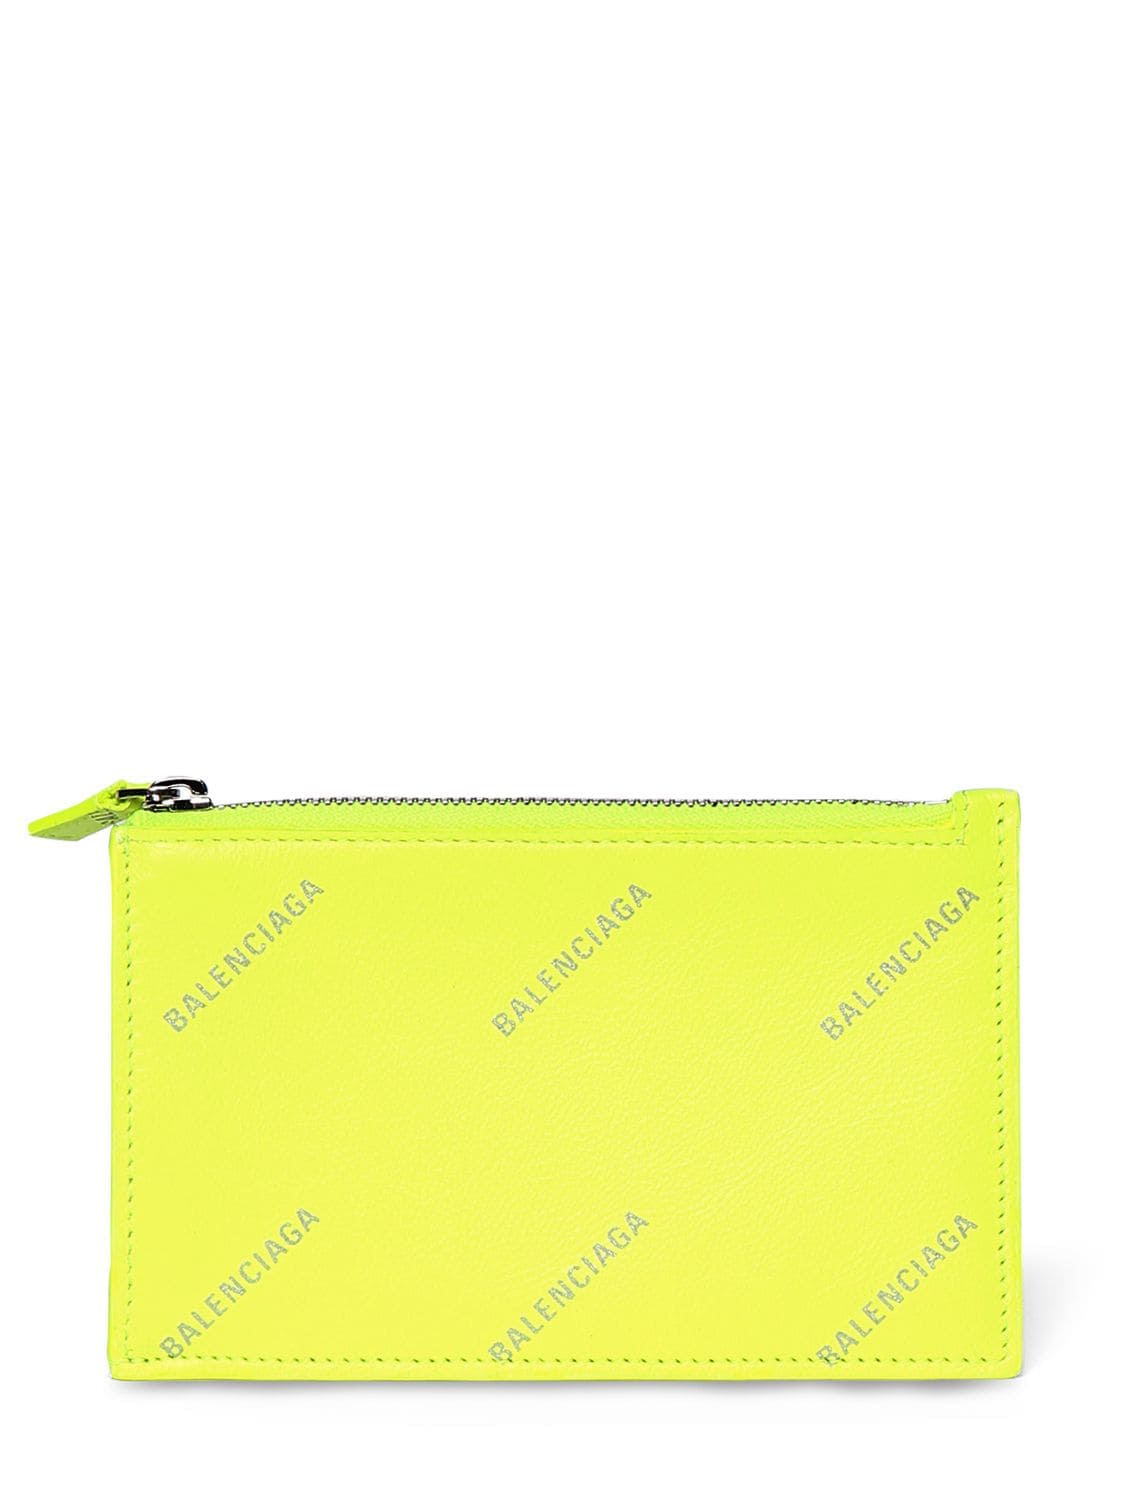 Balenciaga Leather Zip Wallet In Neon Yellow